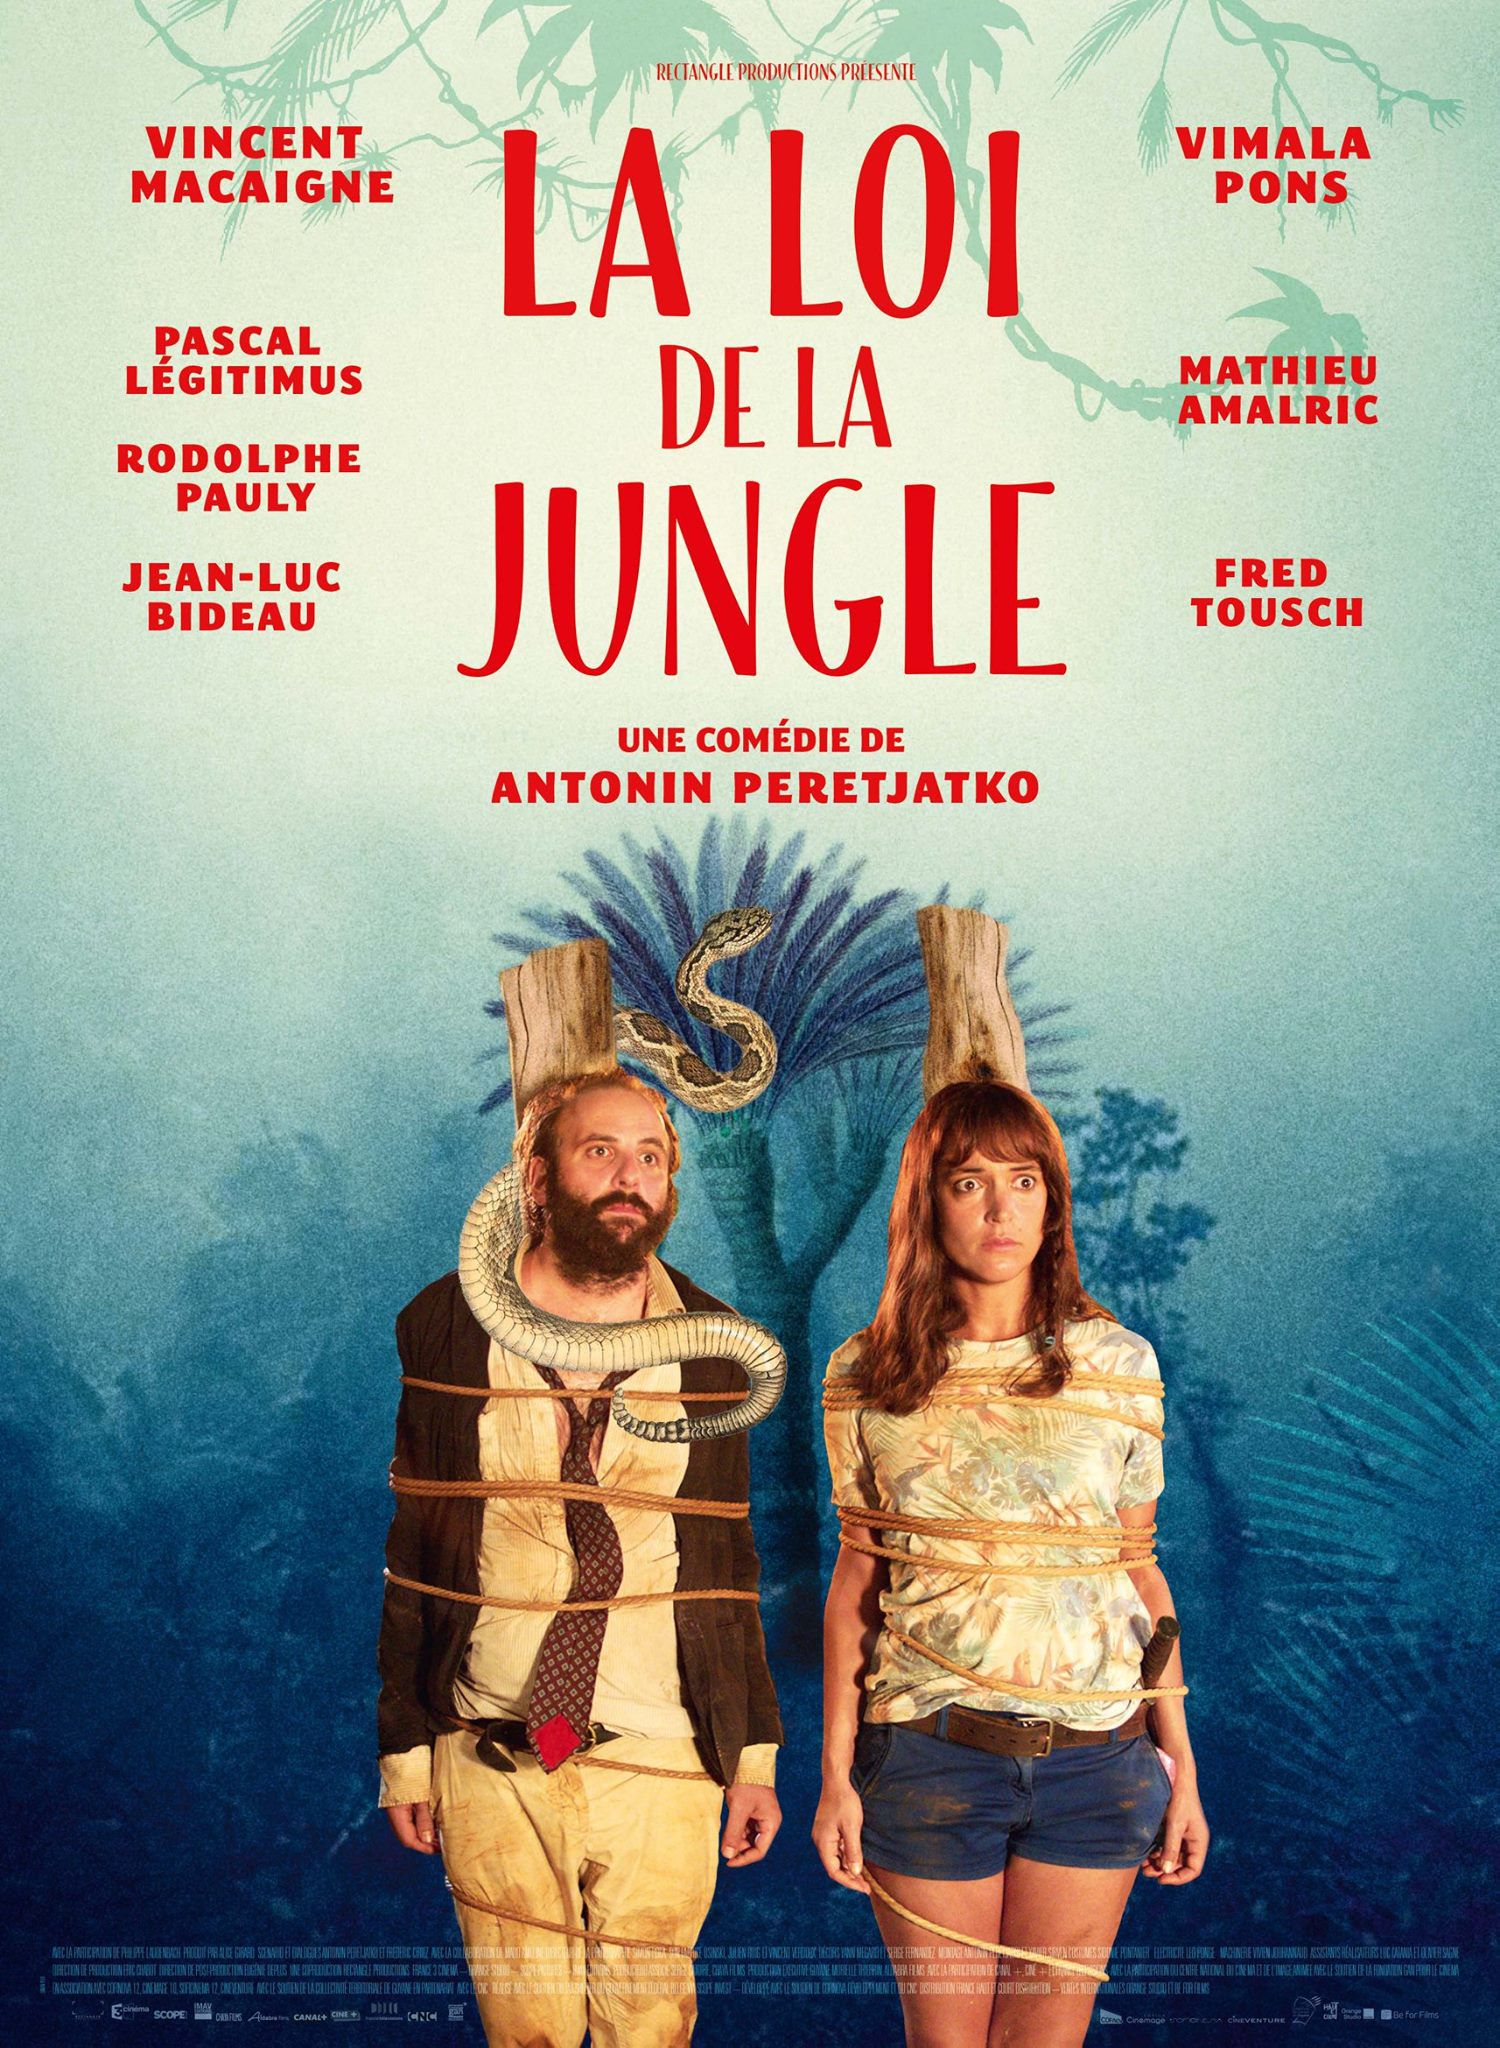 La Loi de la jungle - Film (2016) streaming VF gratuit complet